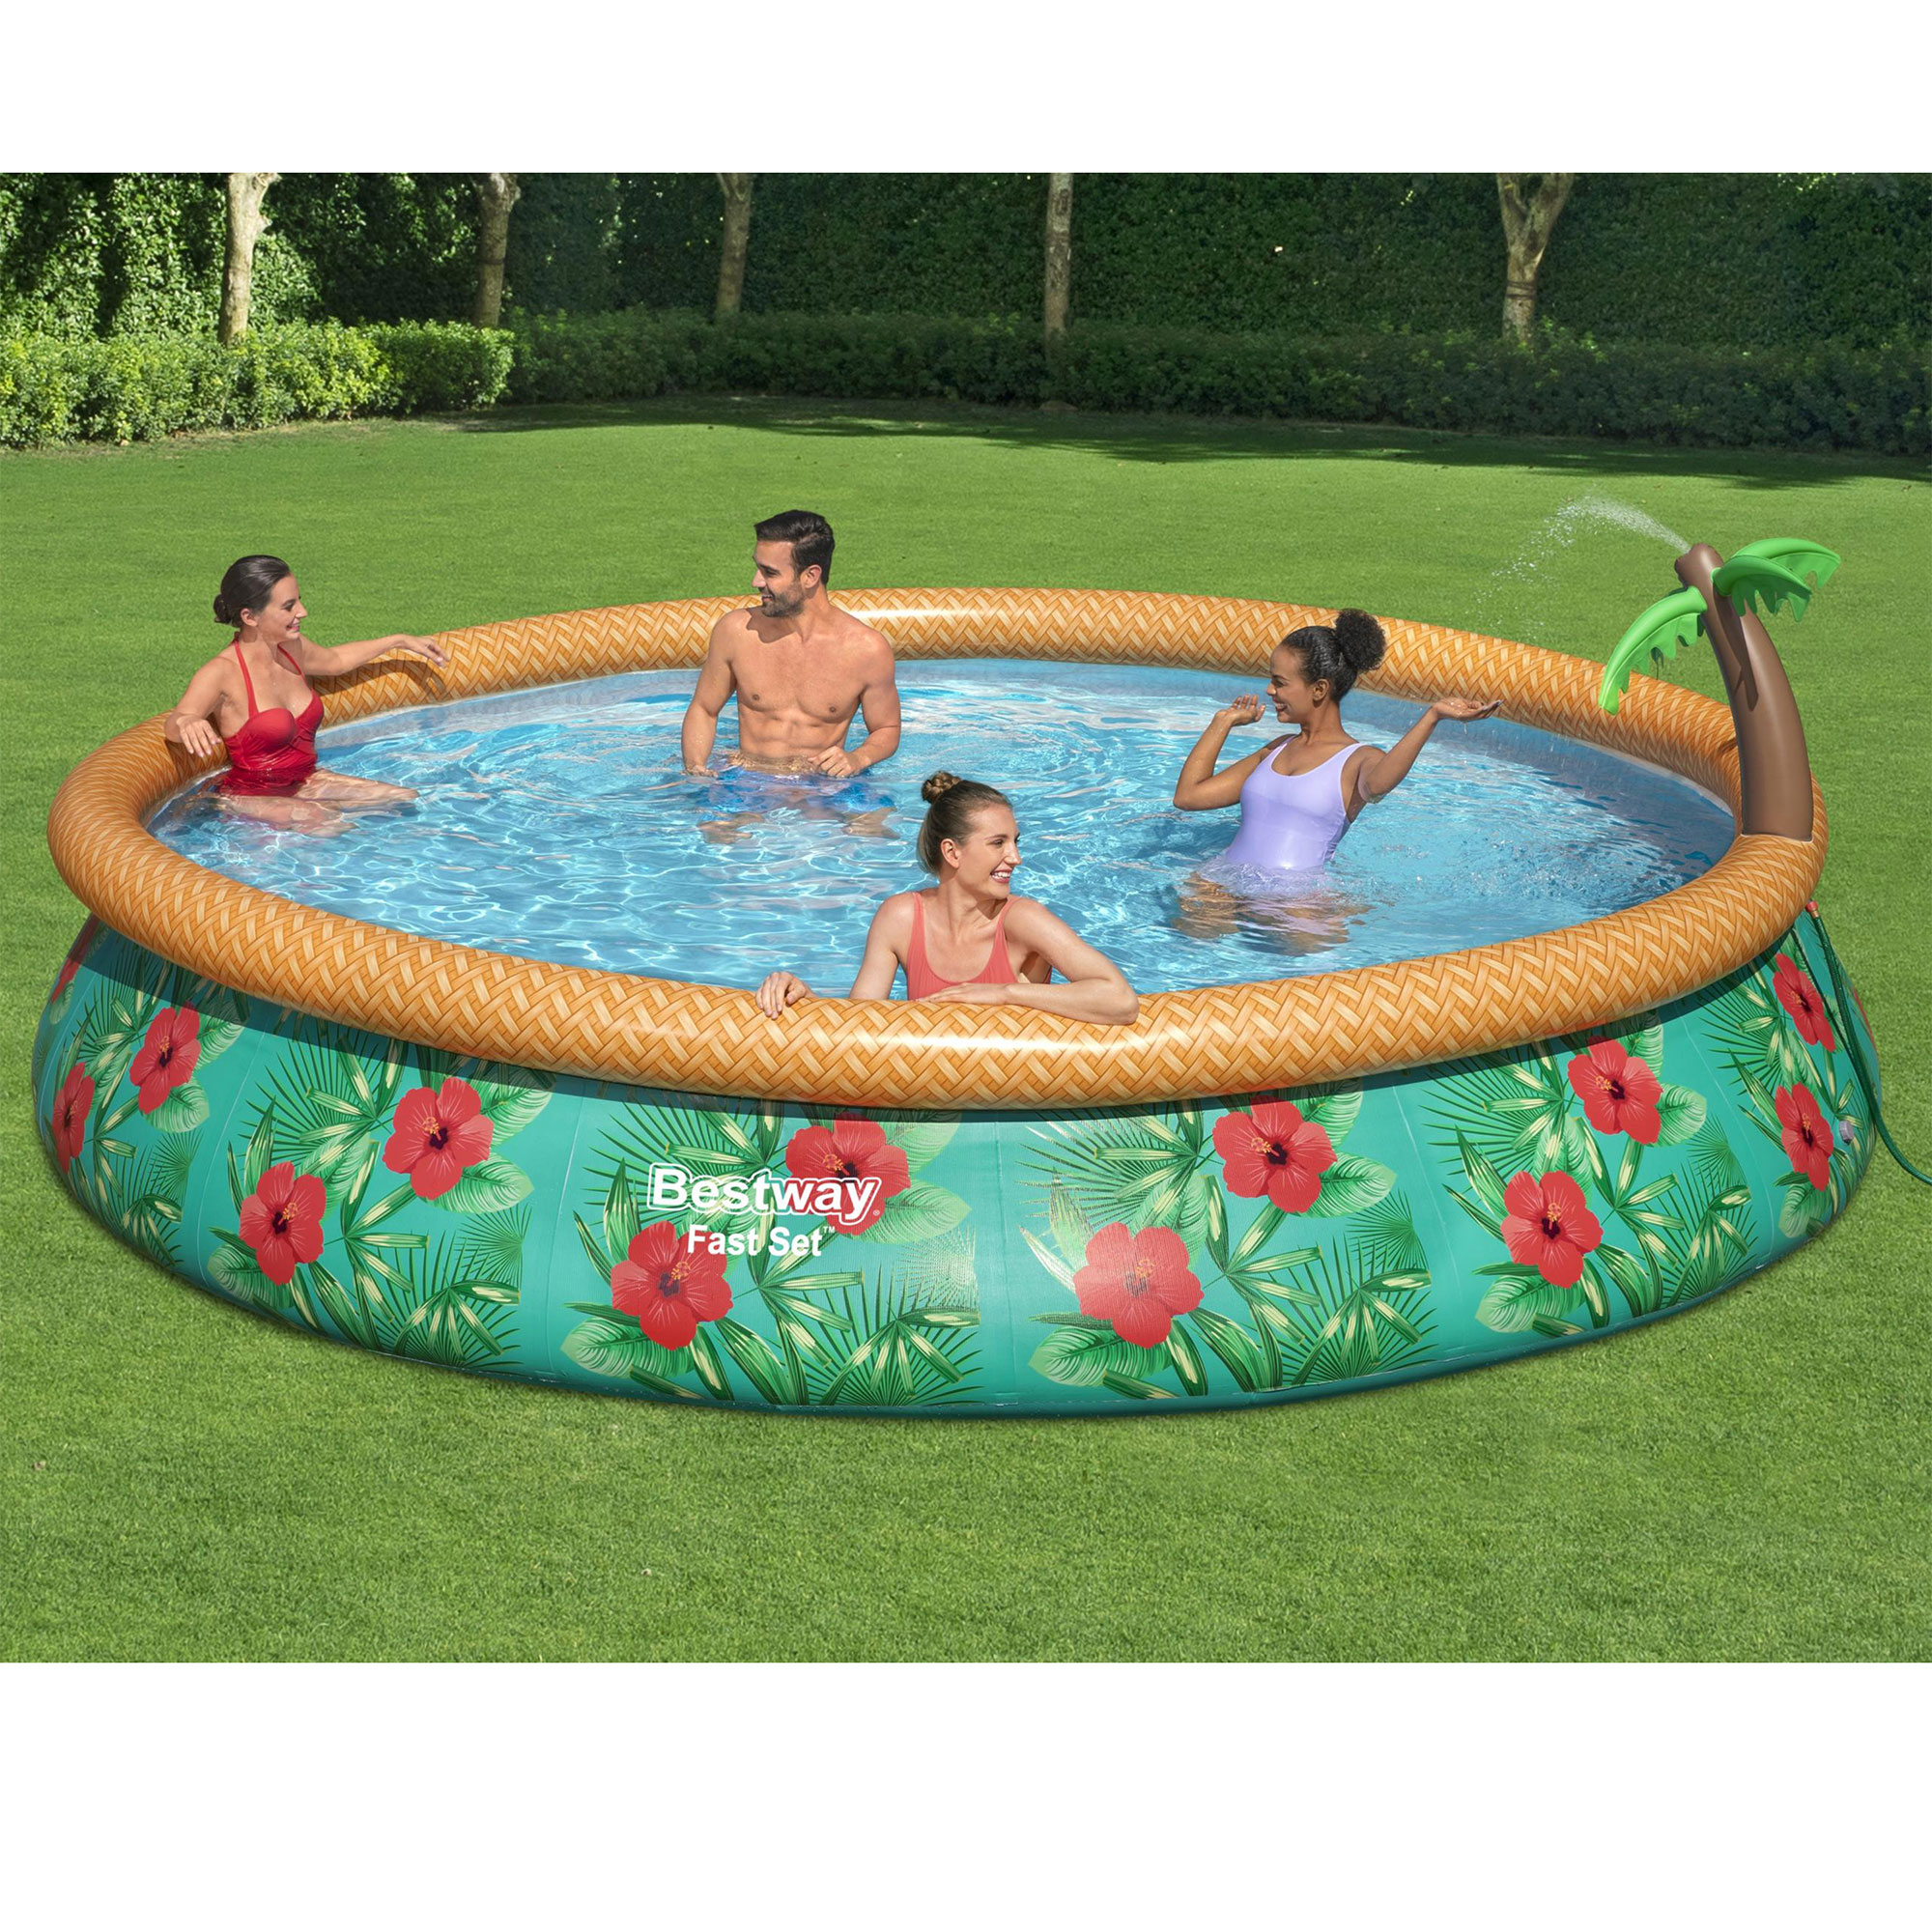 Bestway - Fast Set Paradise Palms Inflatable Pool Set - image 13 of 13